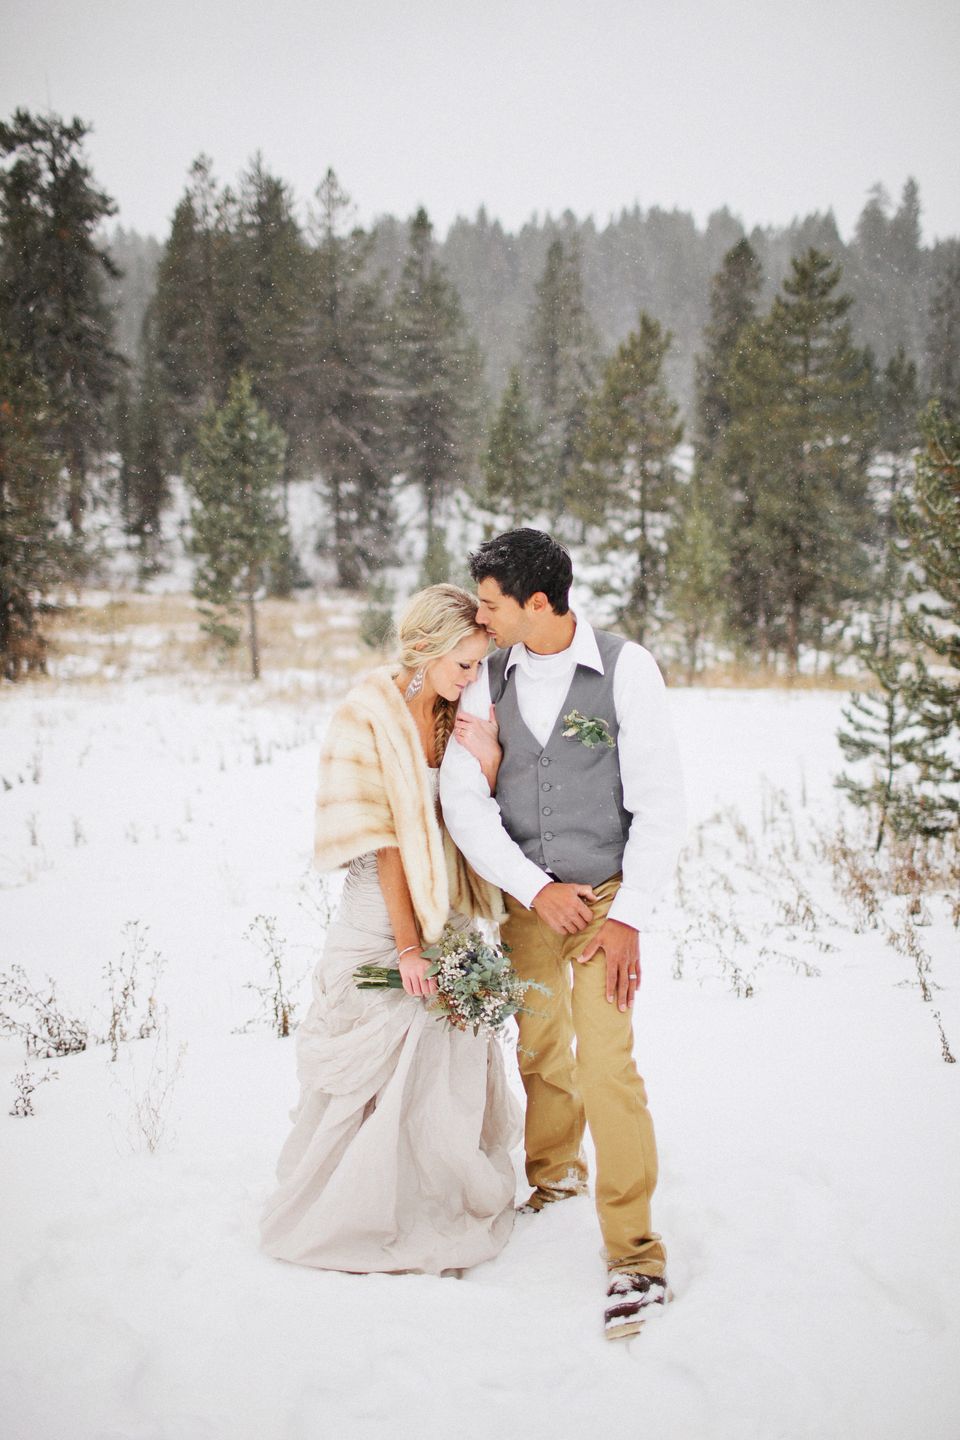 26 Snowy Wedding Photos That Capture The Romance Of Winter